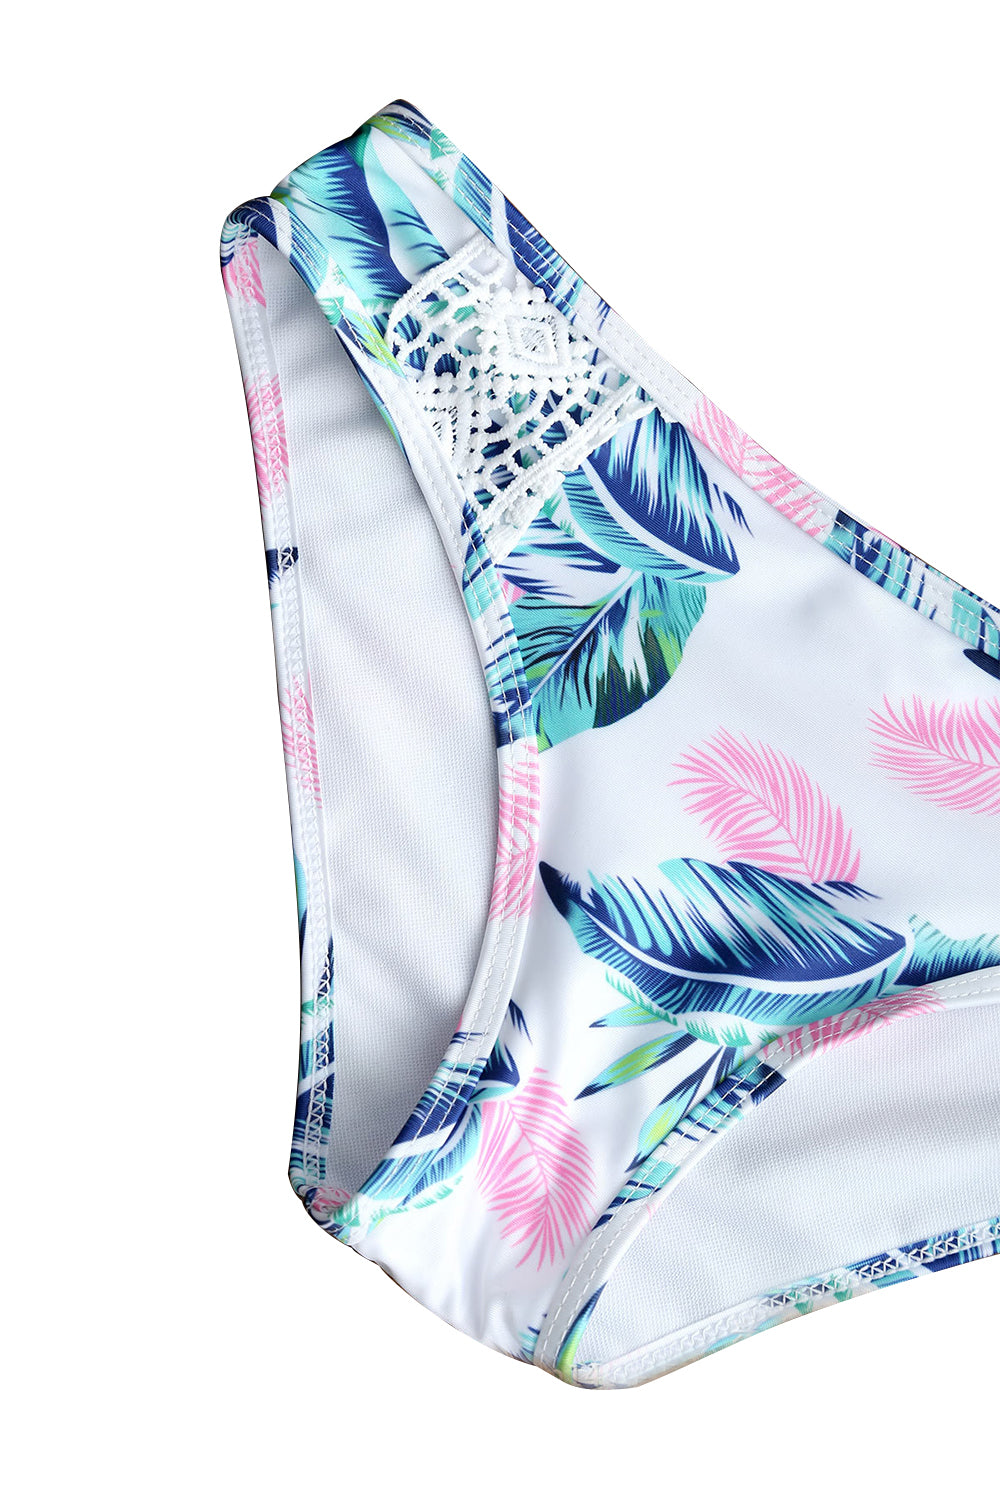 Iyasson Floral Printing With White Lace Tank Top Bikini Set